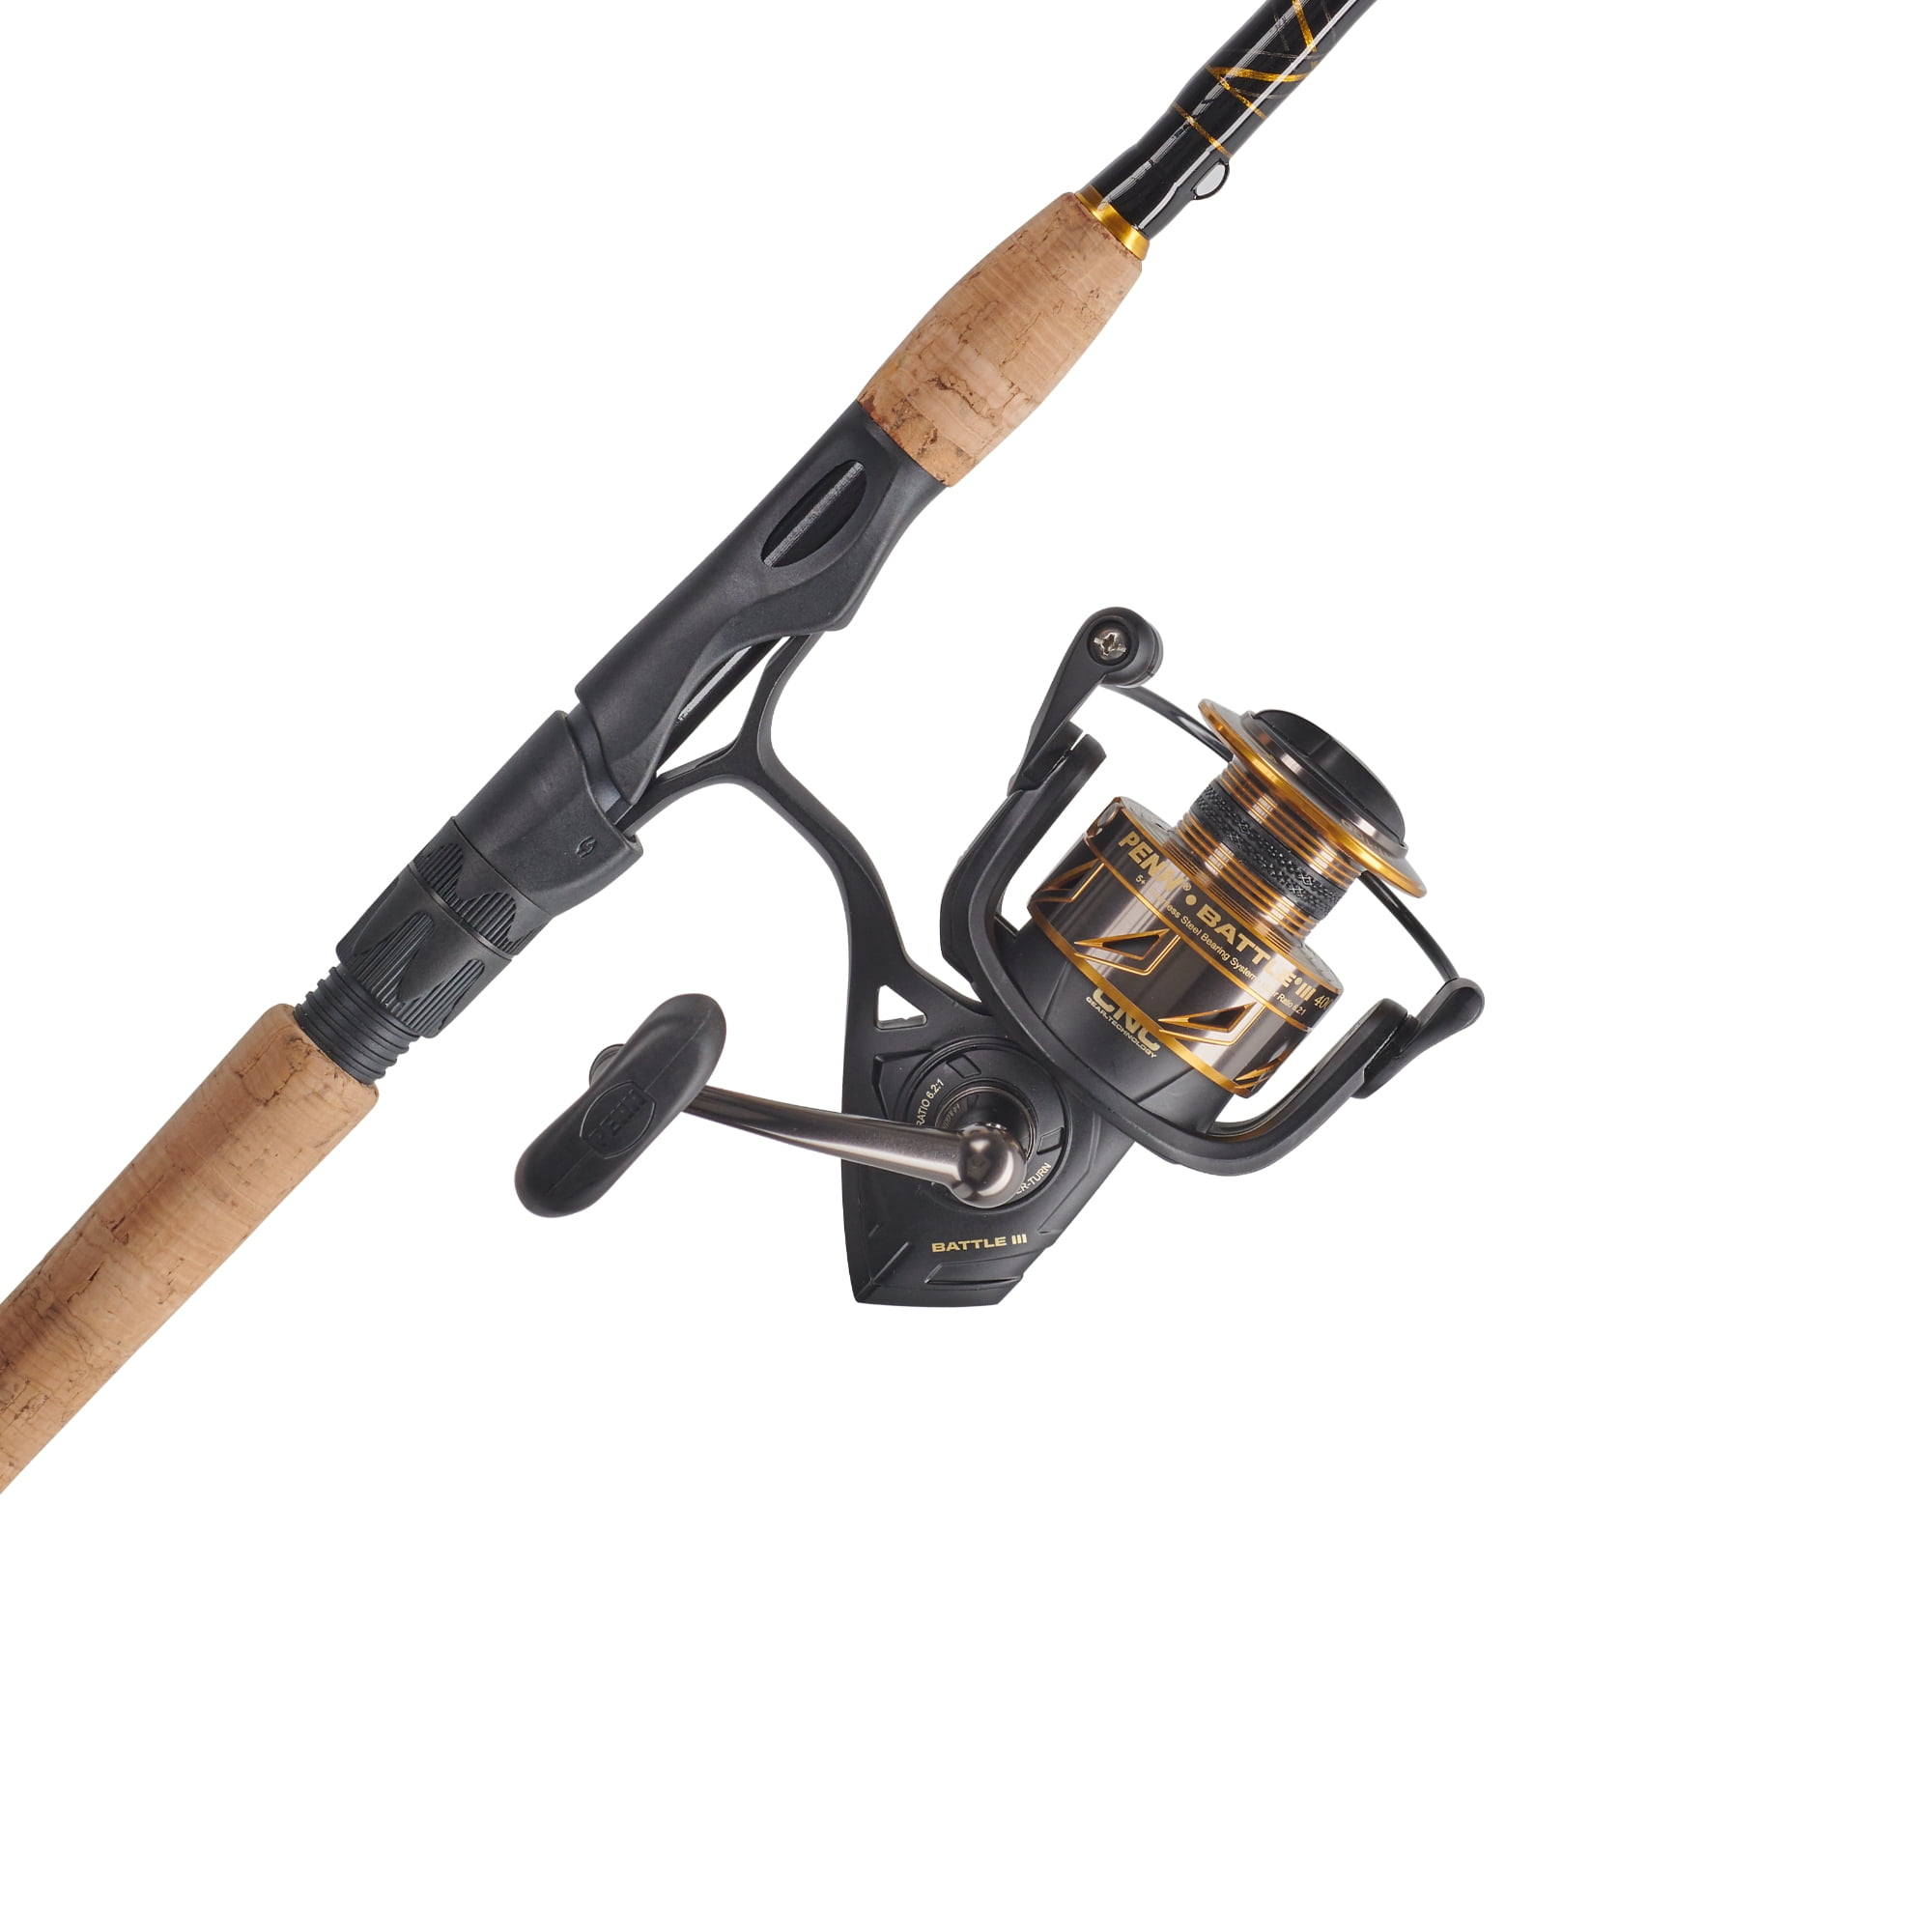 PENN 7' Battle III Fishing Rod and Reel Spinning Combo 